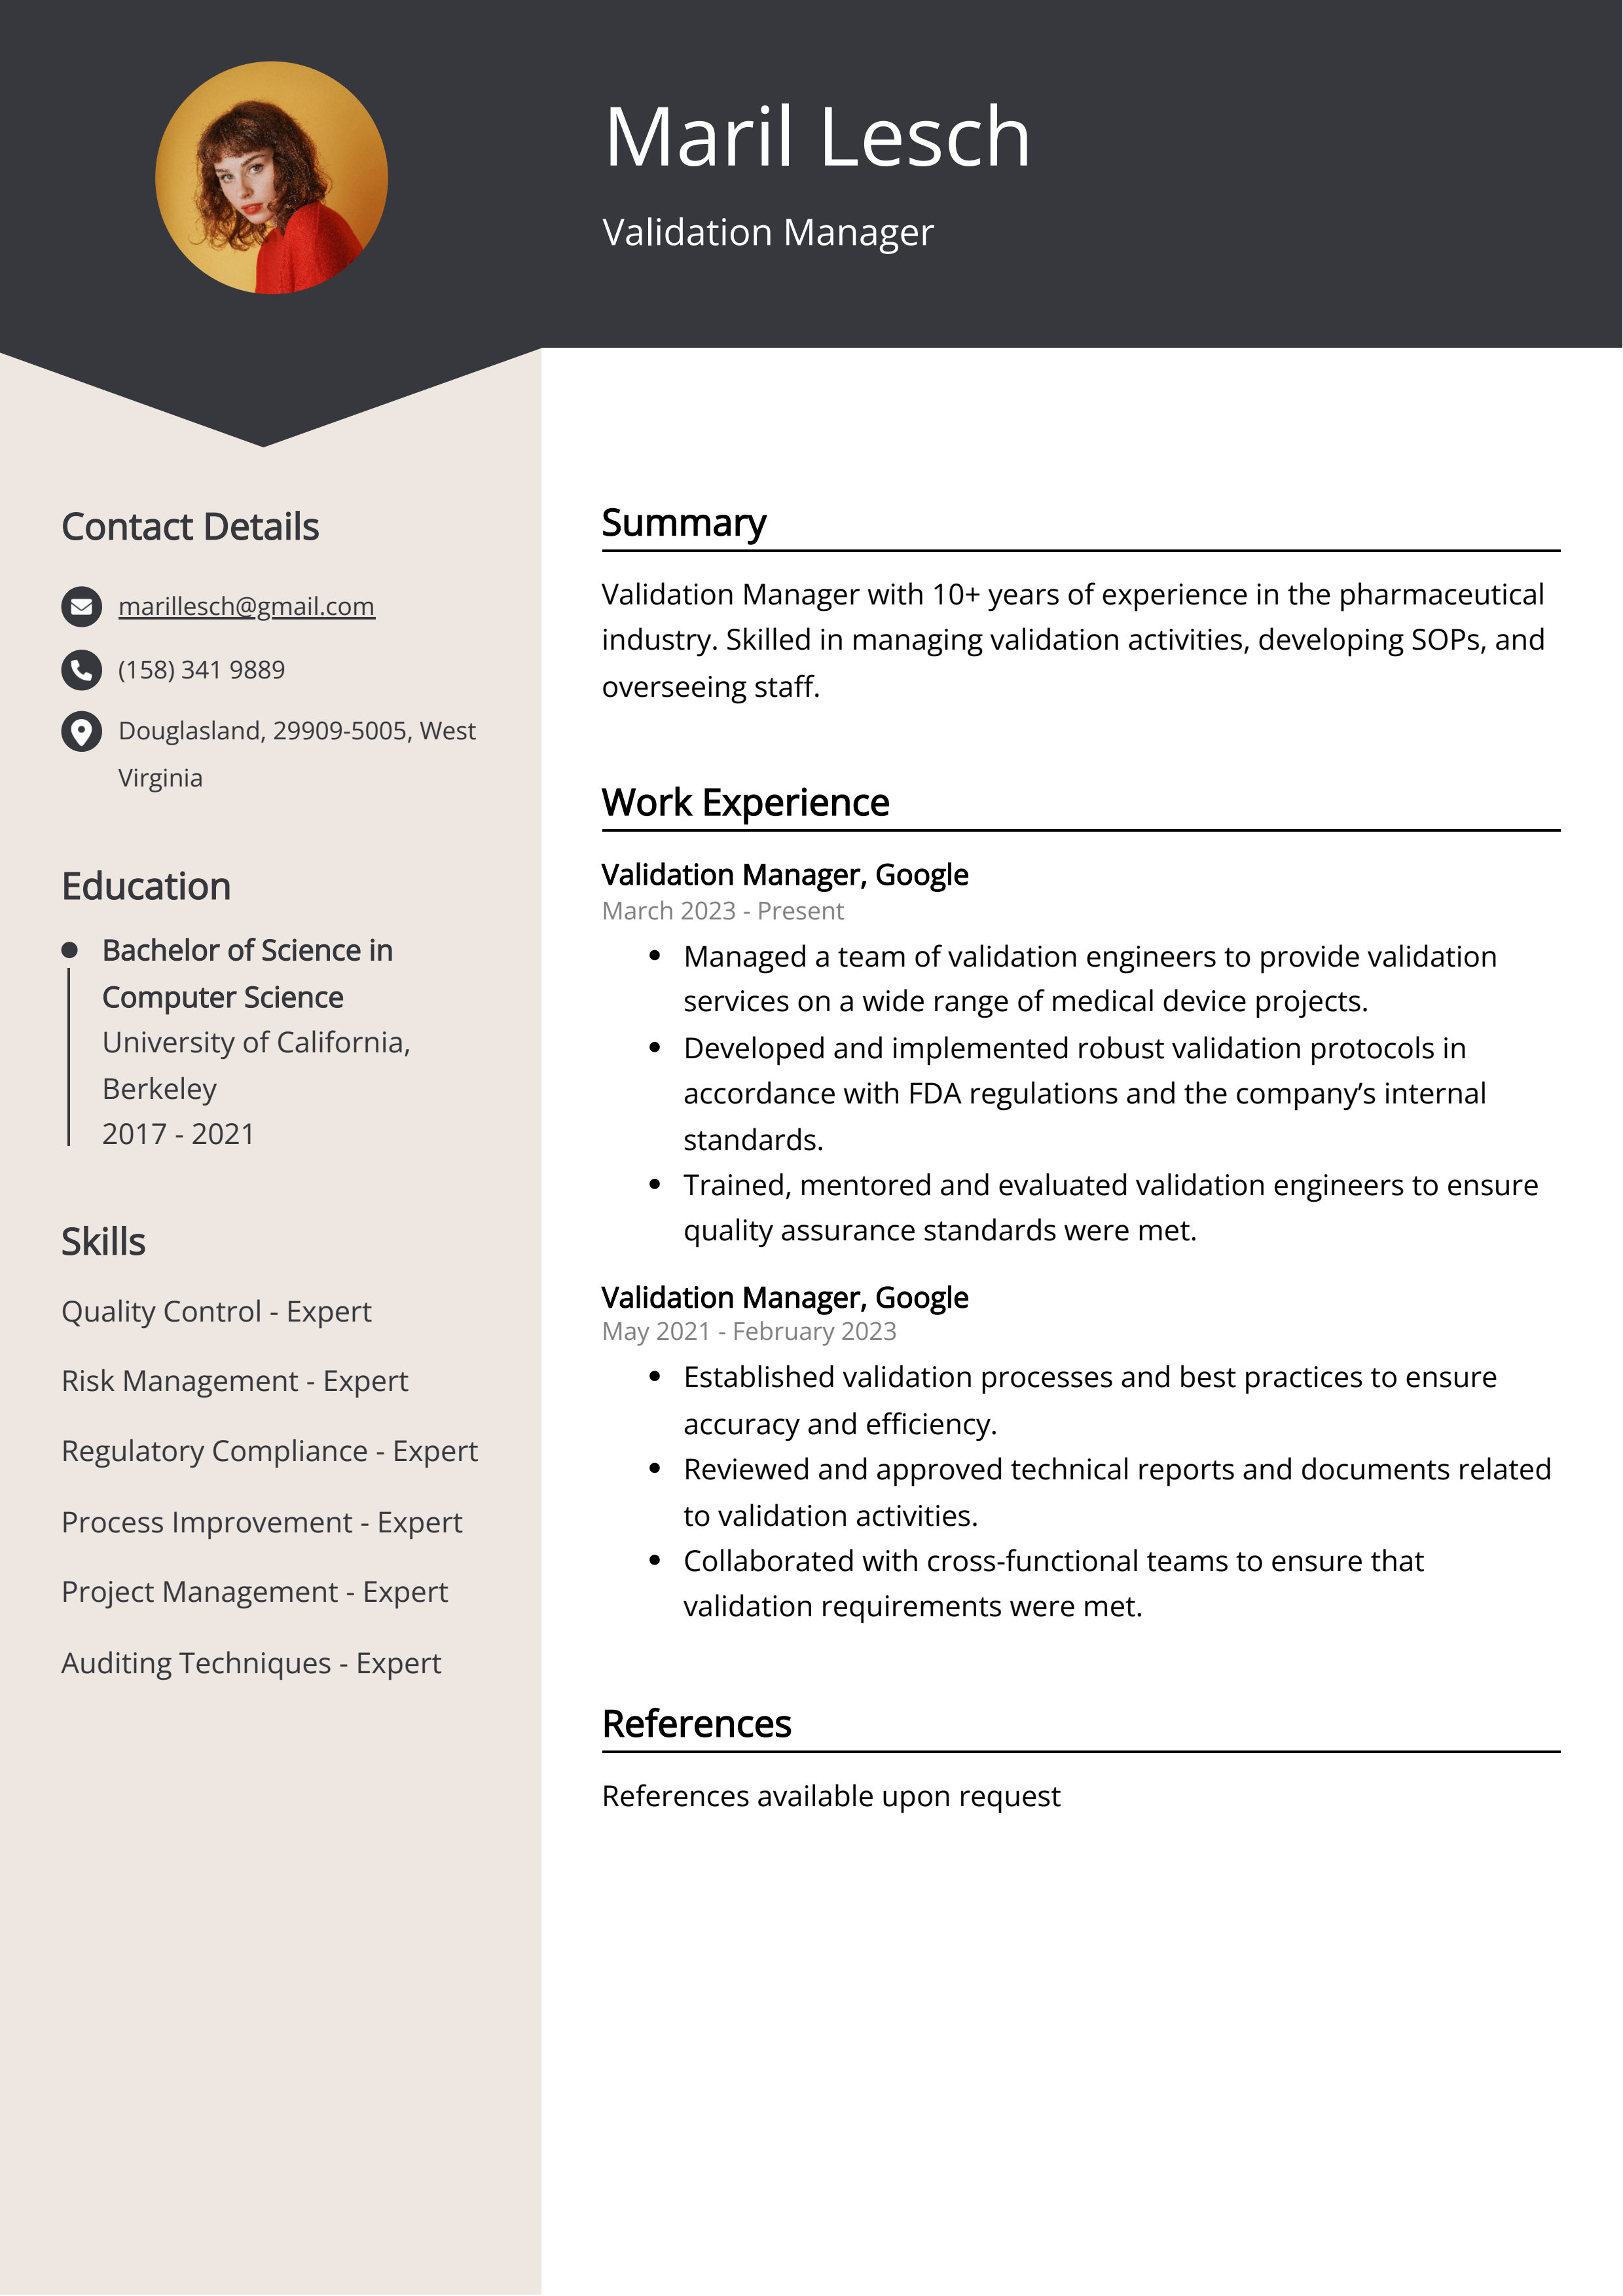 Validation Manager CV Example